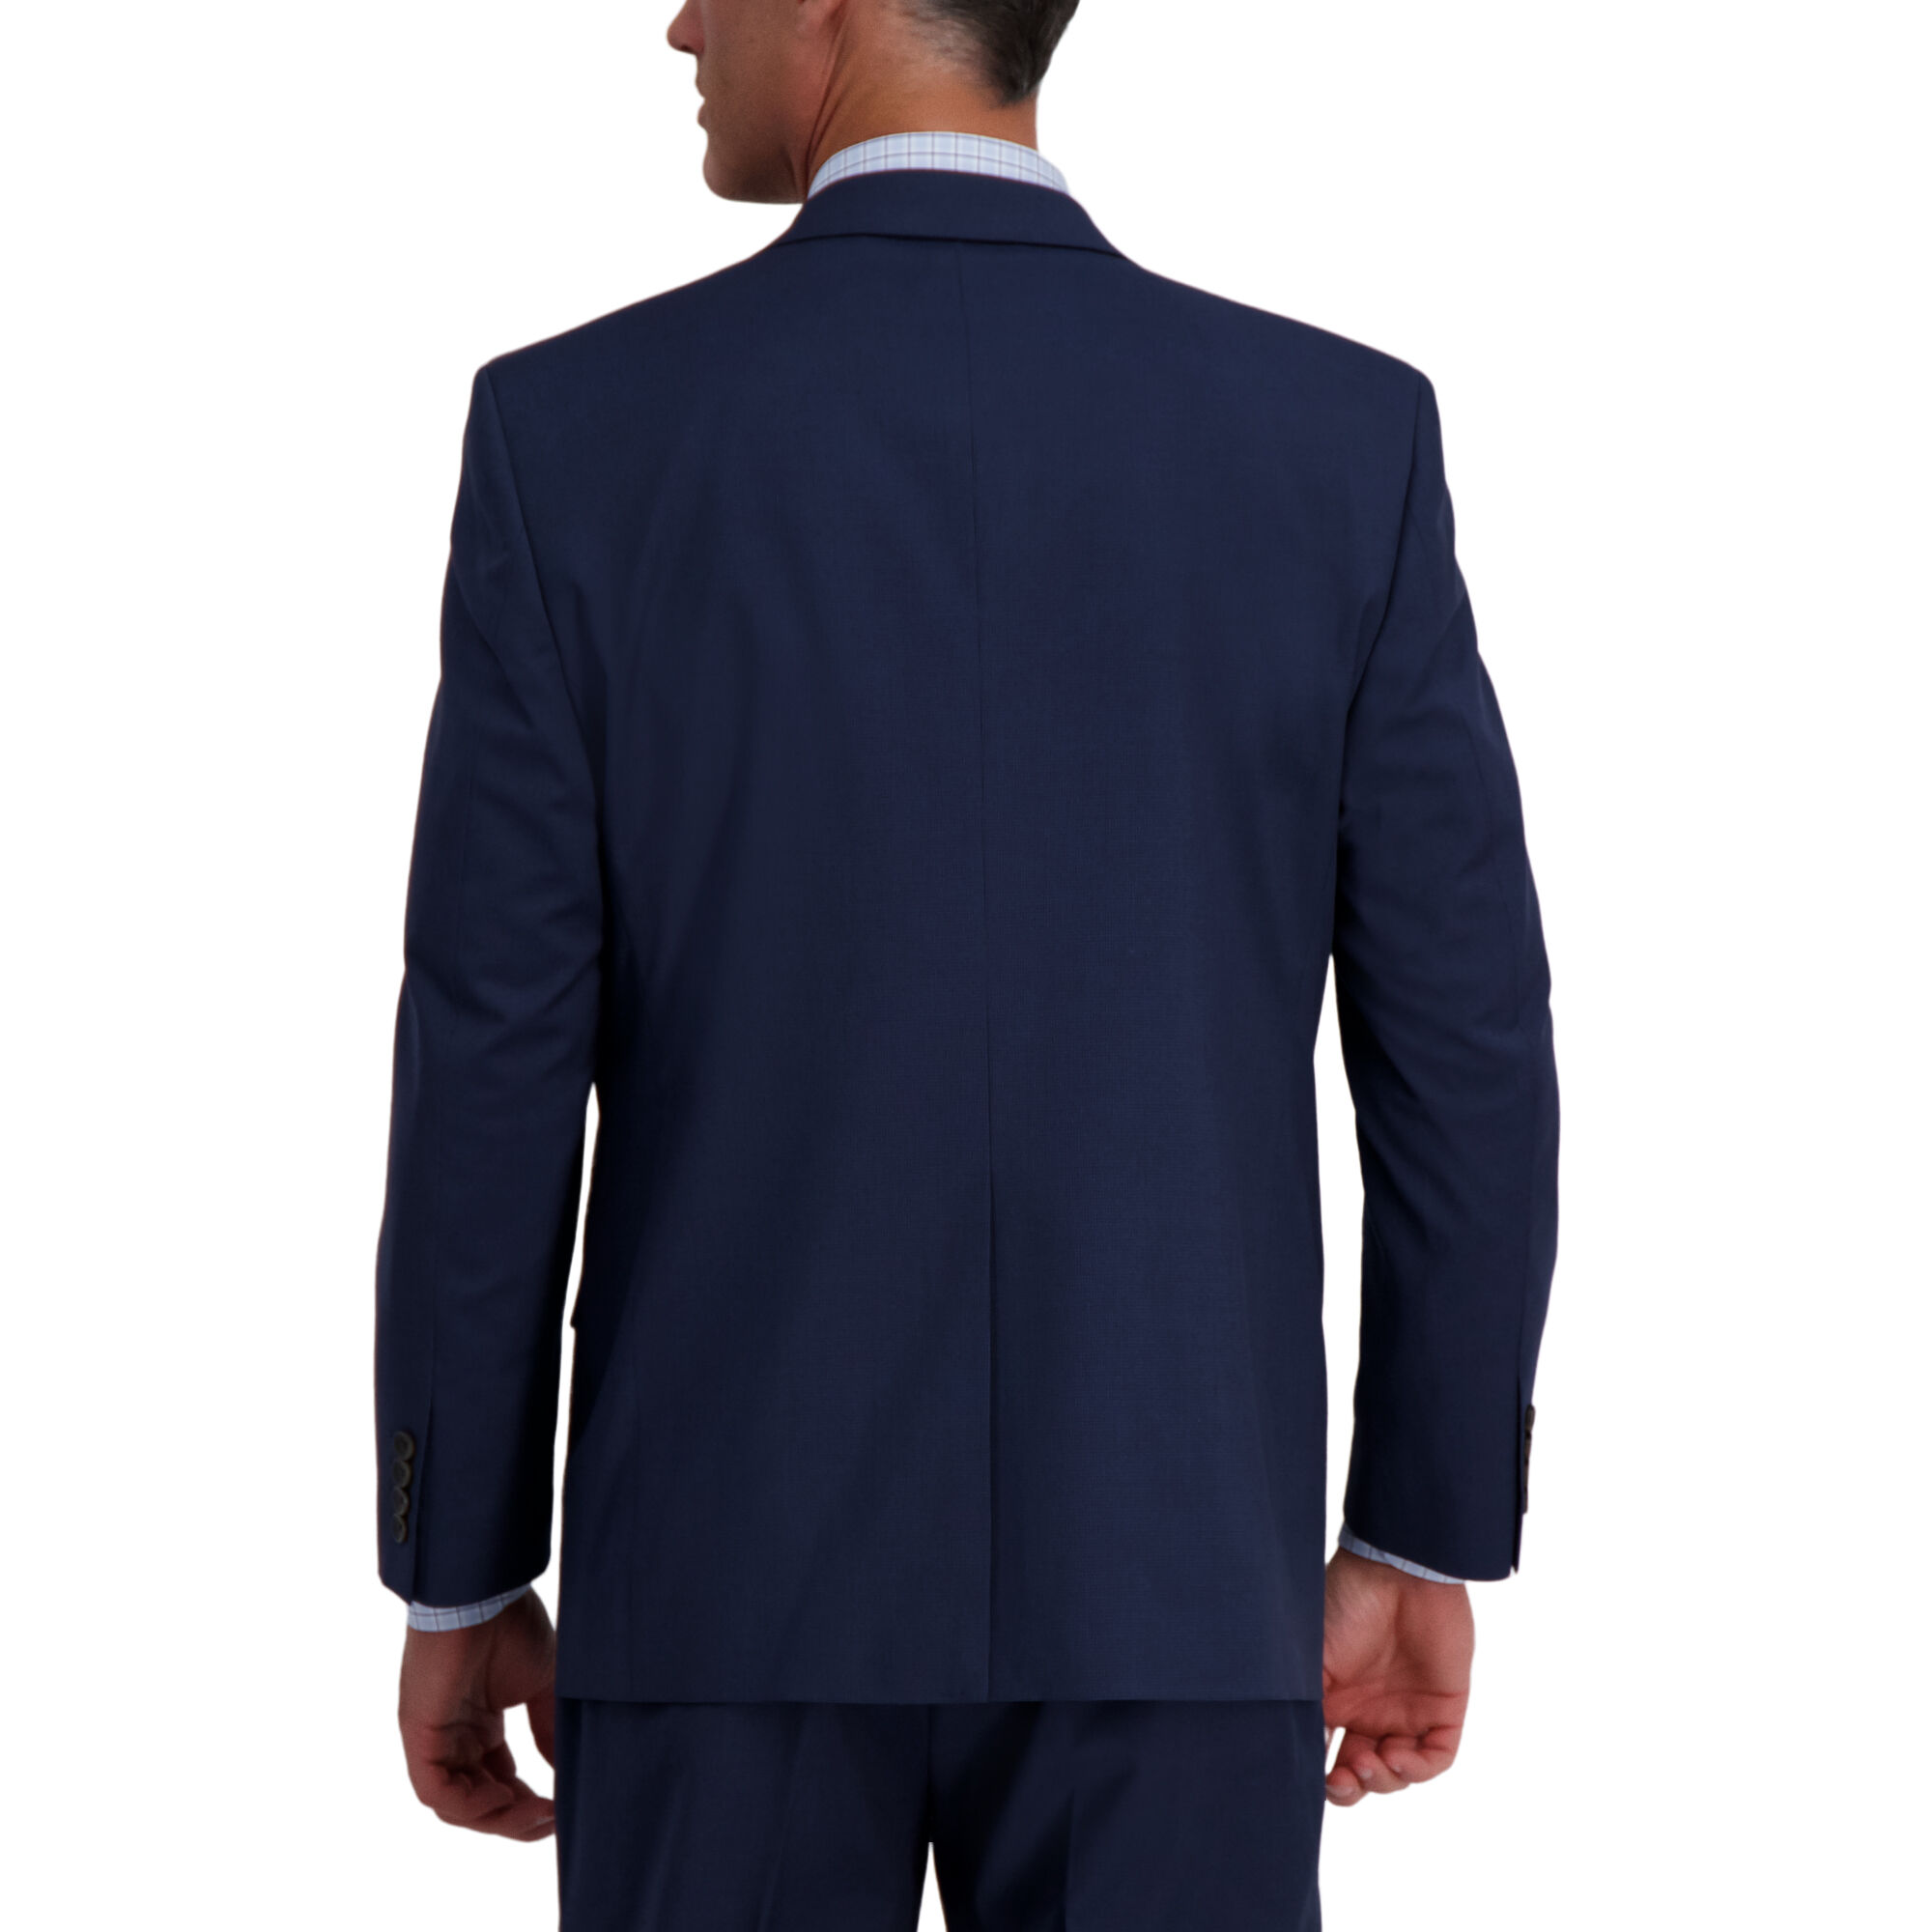 Haggar Suit Jacket Size Chart